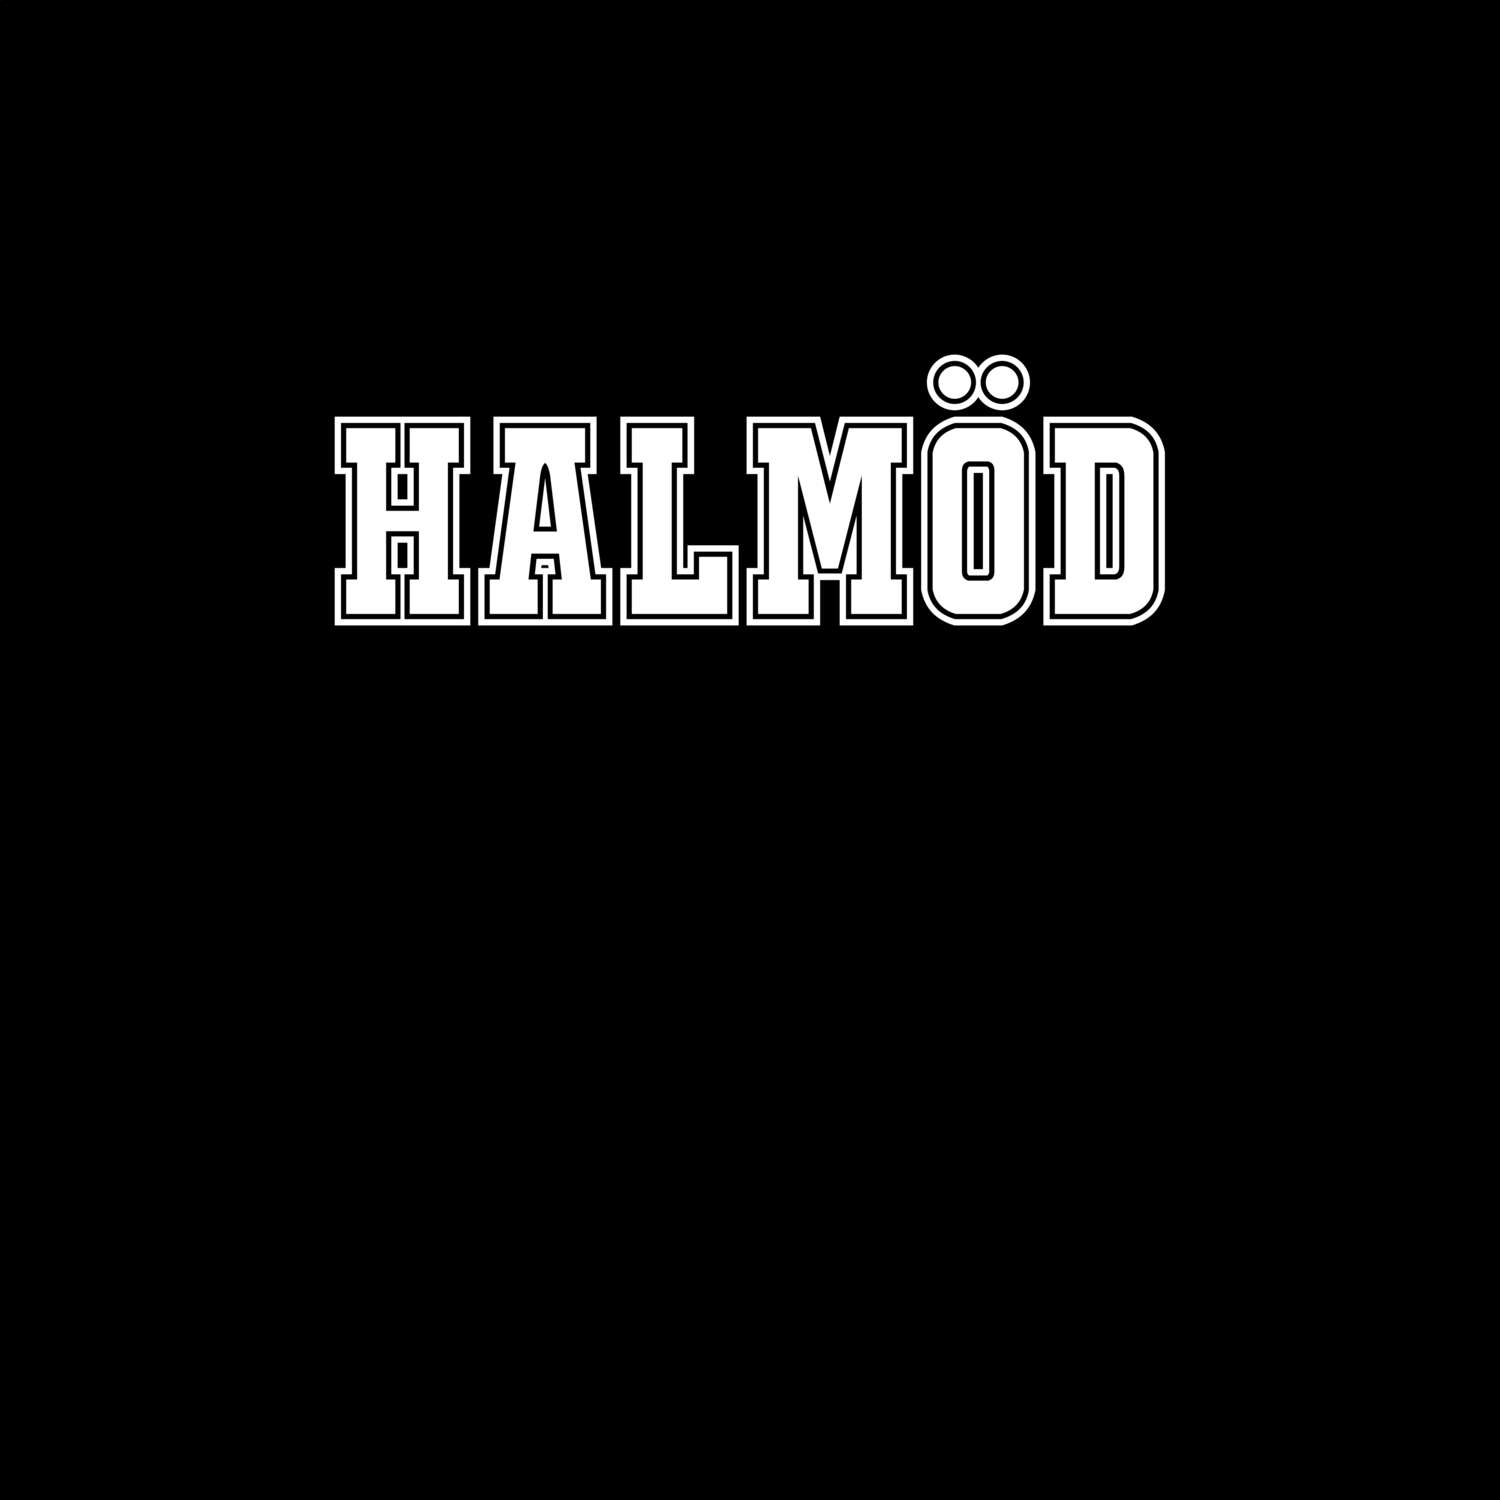 Halmöd T-Shirt »Classic«